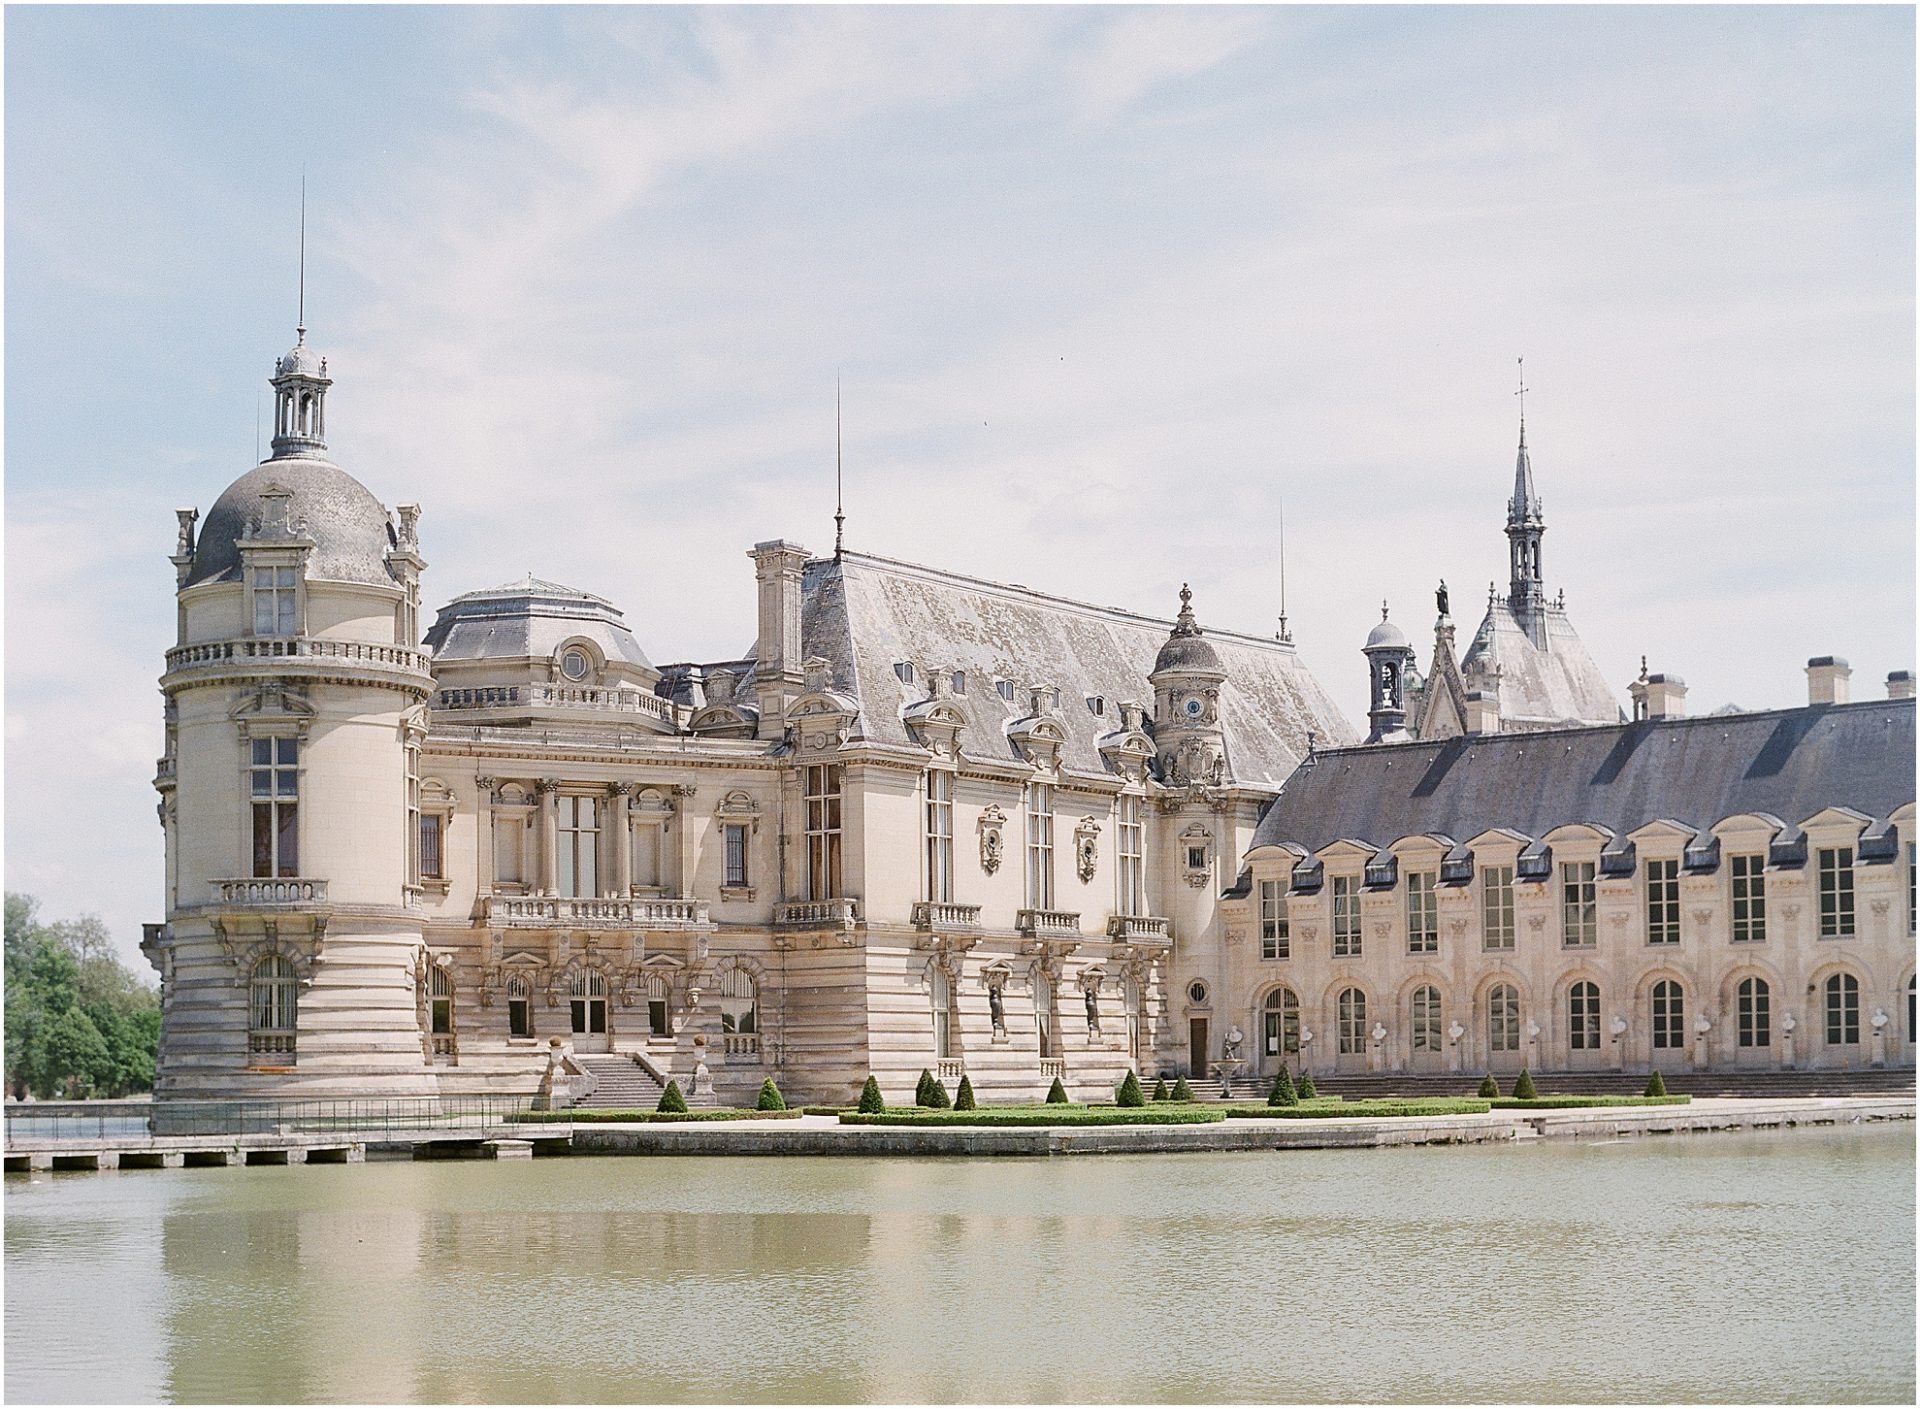 Chateau wedding venues around Paris France